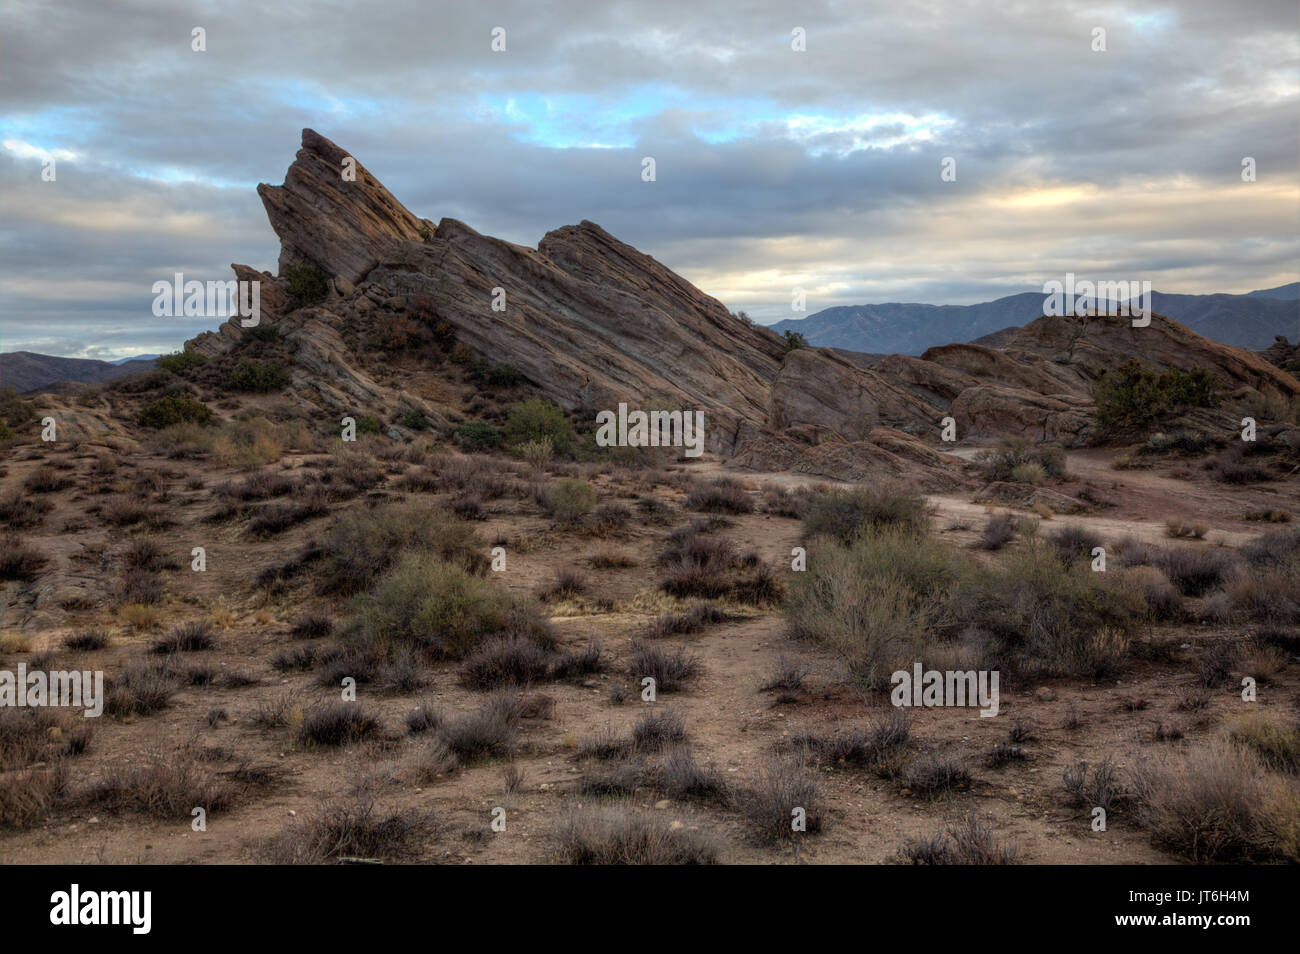 A portion of Vasquez Rocks in the calif desert. Stock Photo